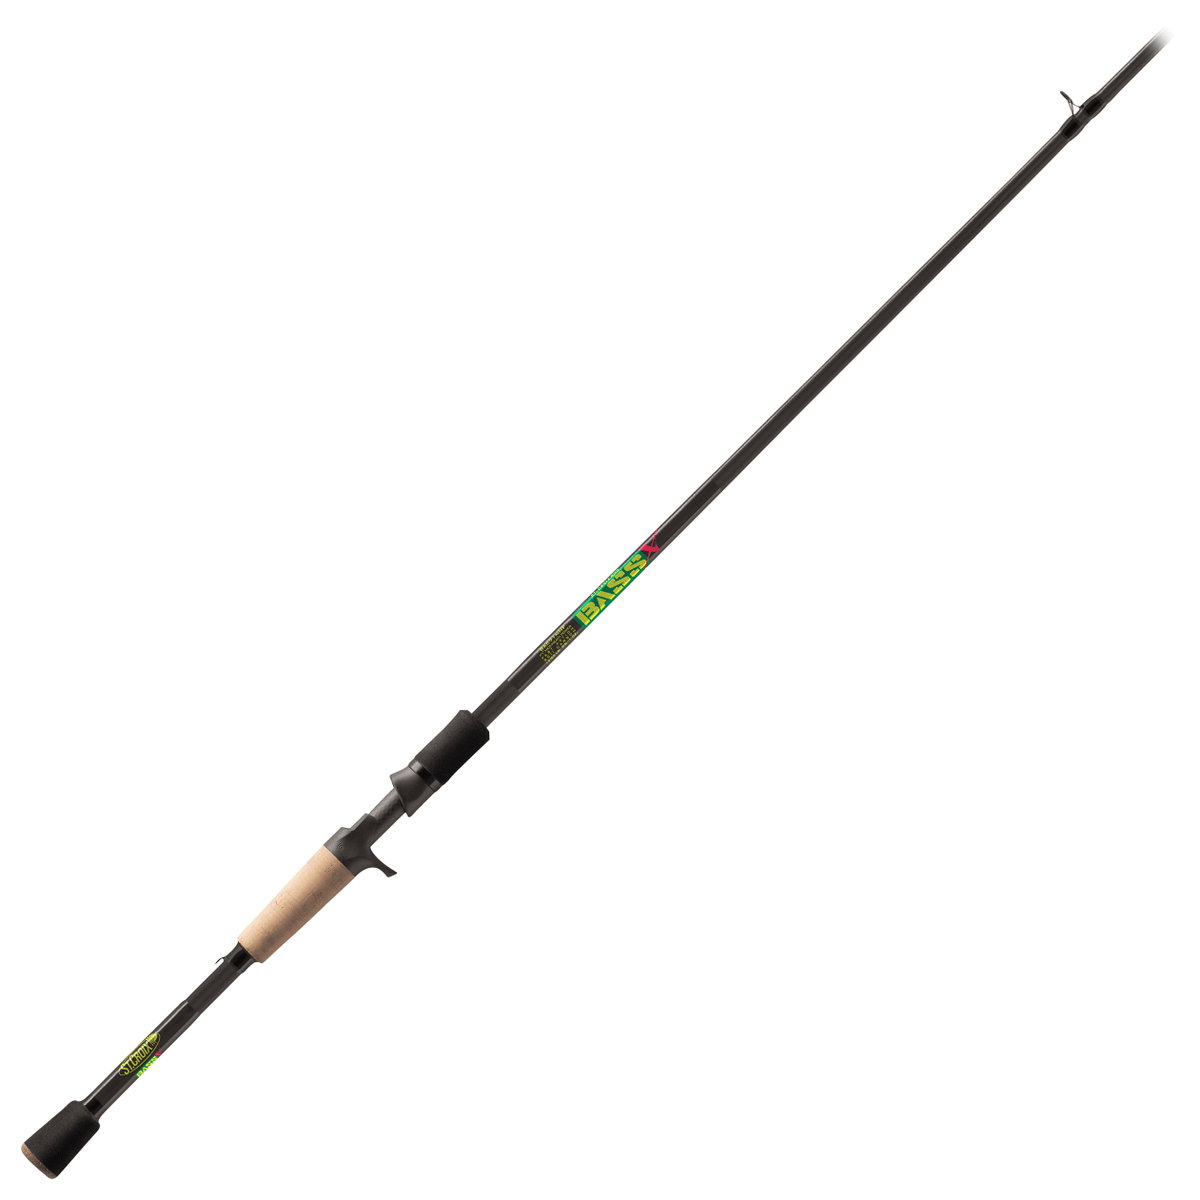 St. Croix Bass x Casting Rod